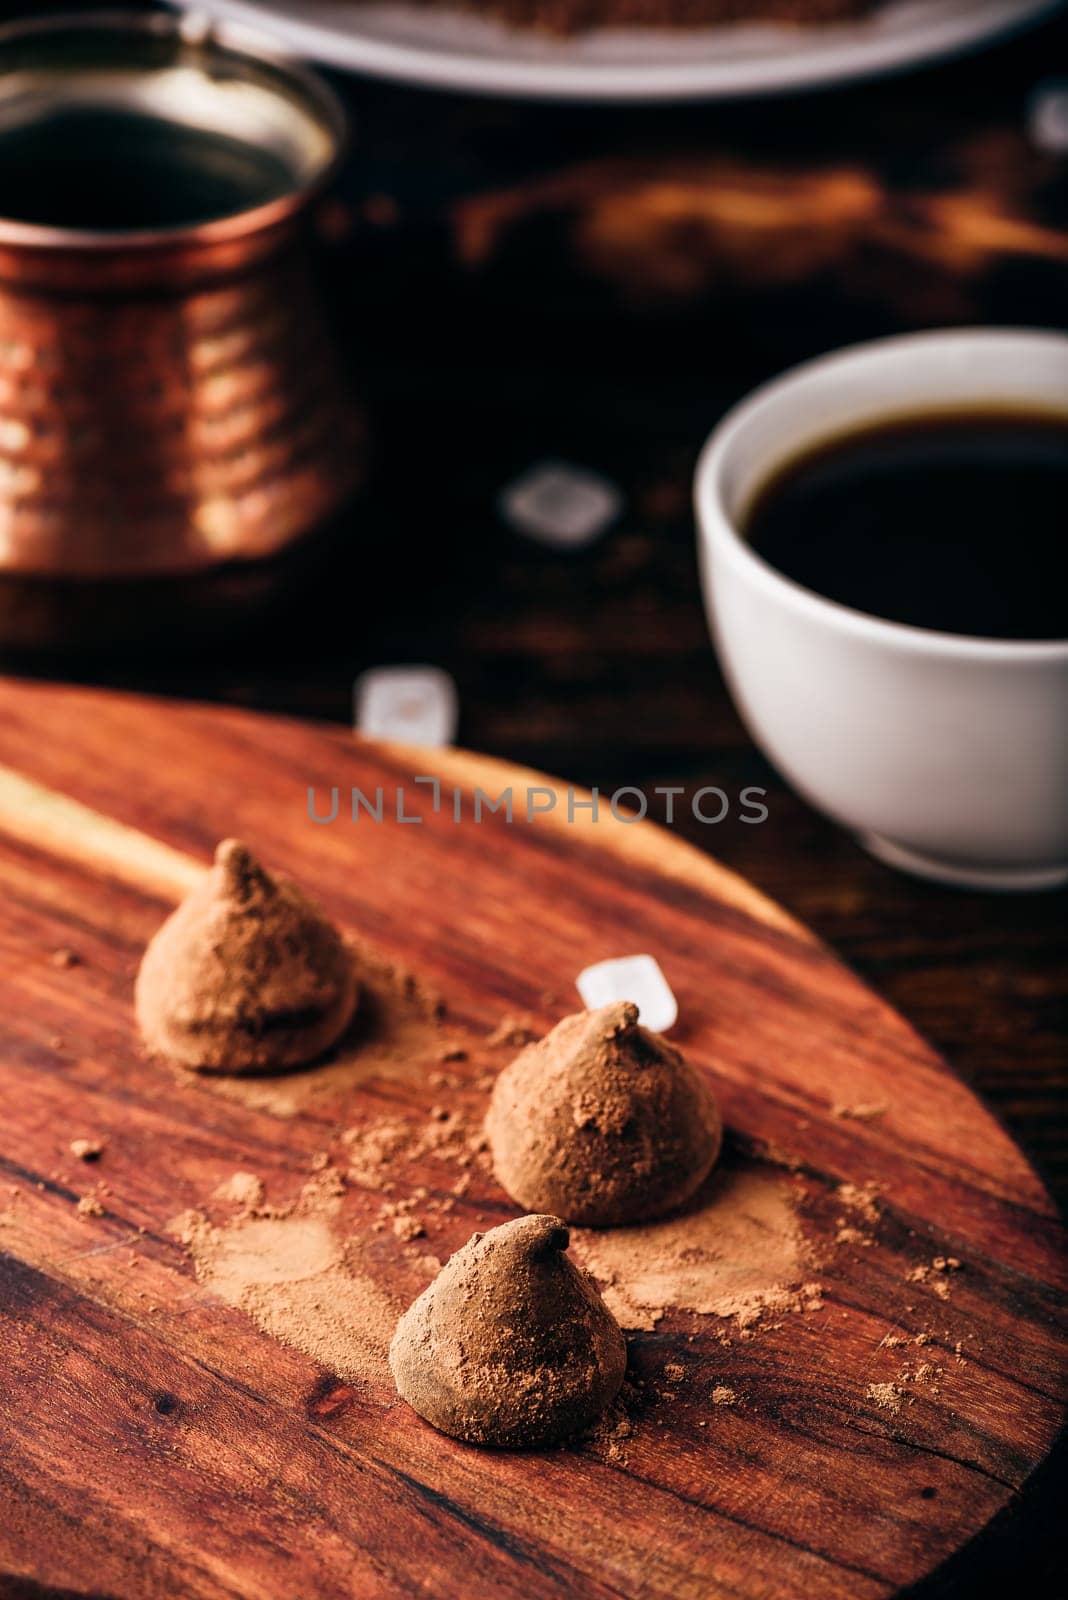 Homemade chocolate truffles by Seva_blsv